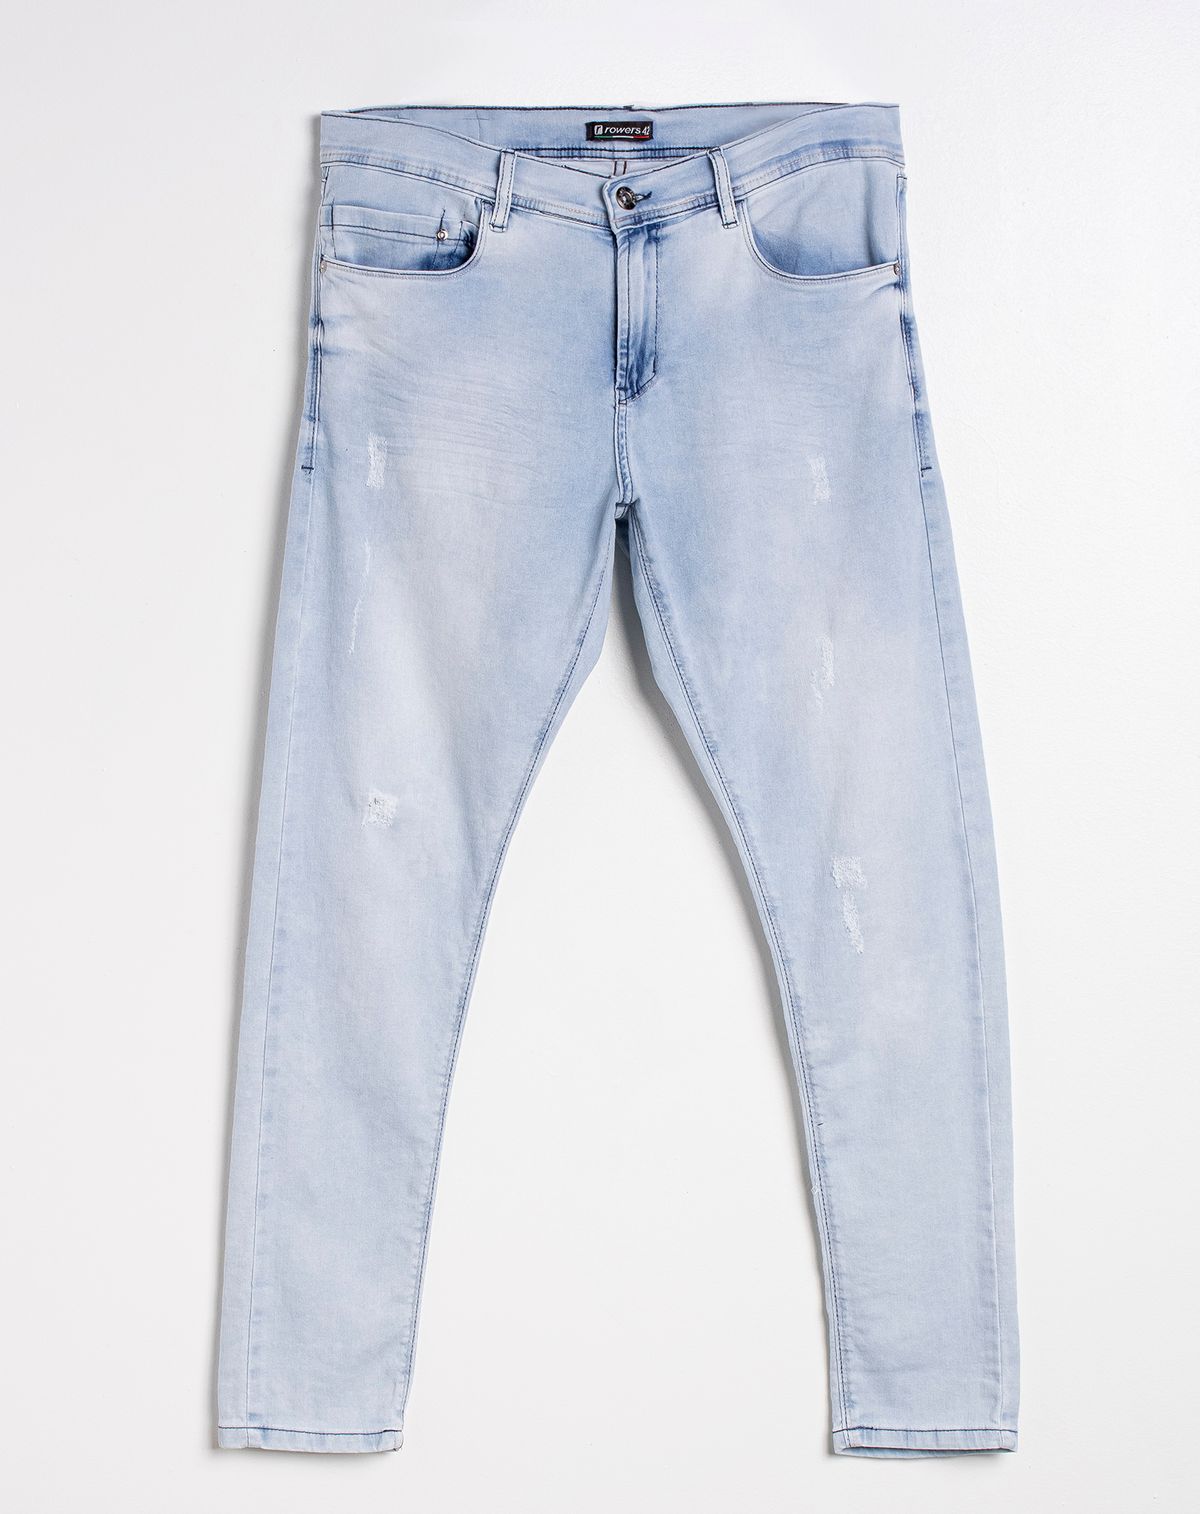 621051002-calca-jeans-clara-skinny-masculina-jeans-40-563